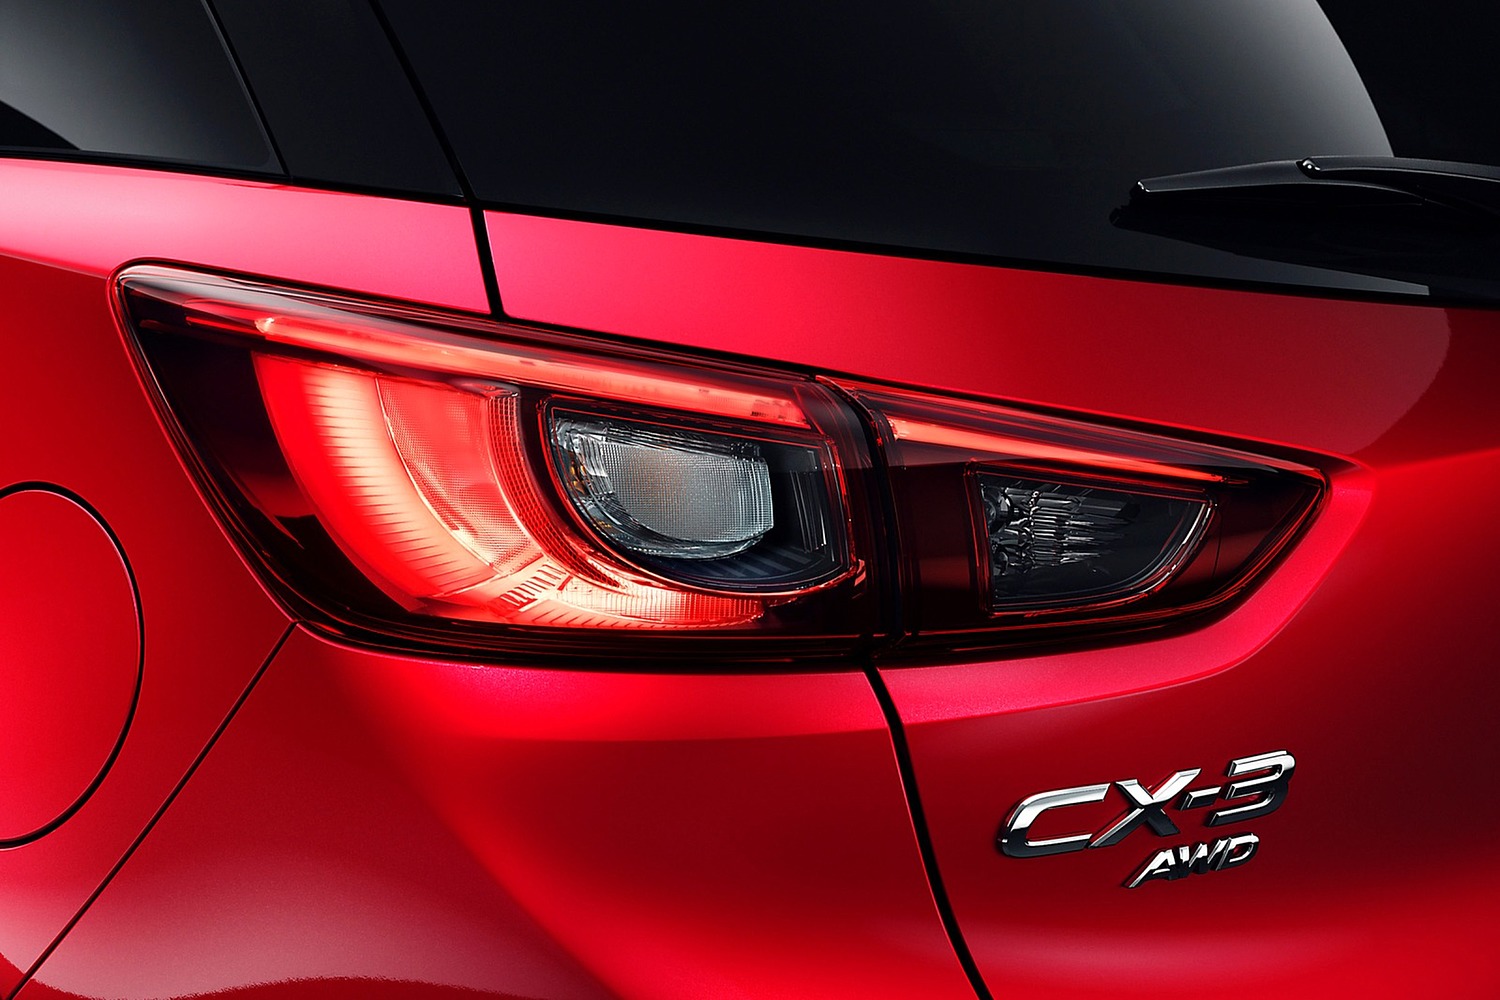 Mazda CX-3 Grand Touring 4dr SUV Rear Badge (2016 model year shown)